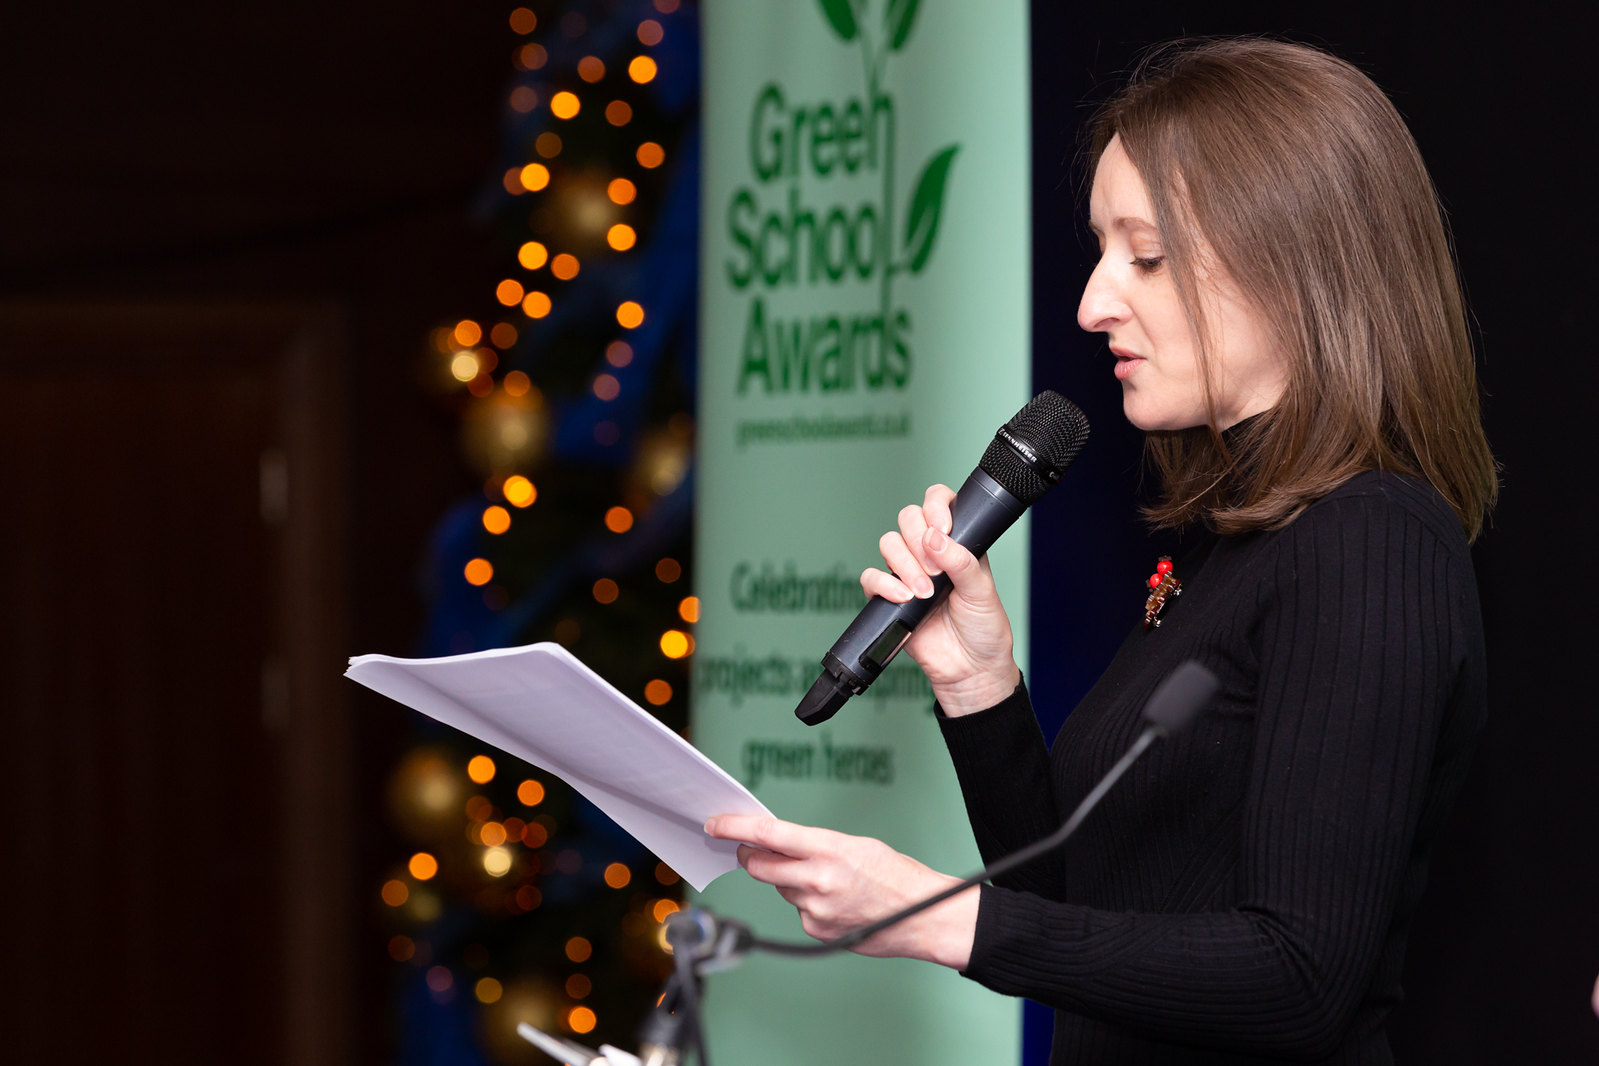 Green School Awards 2021